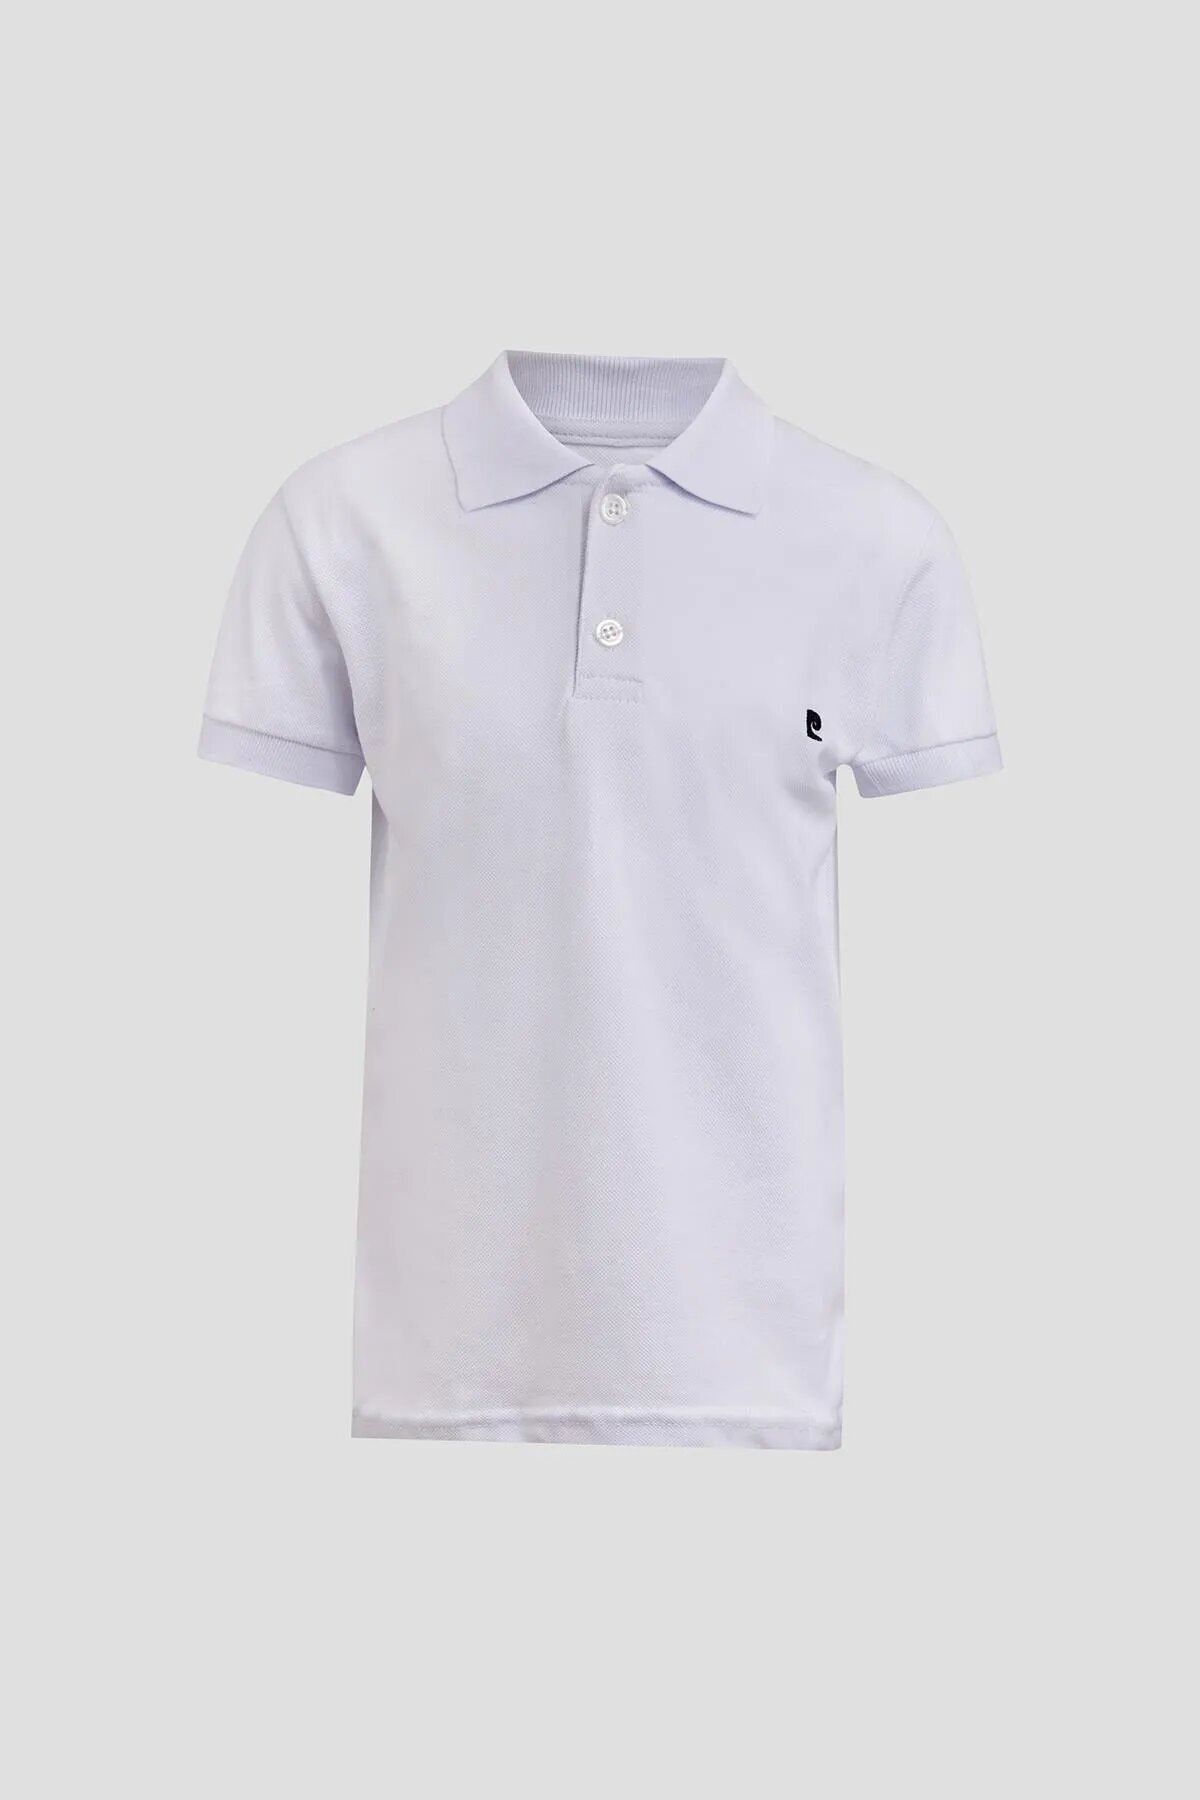 Pierre Cardin Unisex %100 Pamuk Polo Yaka Çocuk Tişört / T-shirt